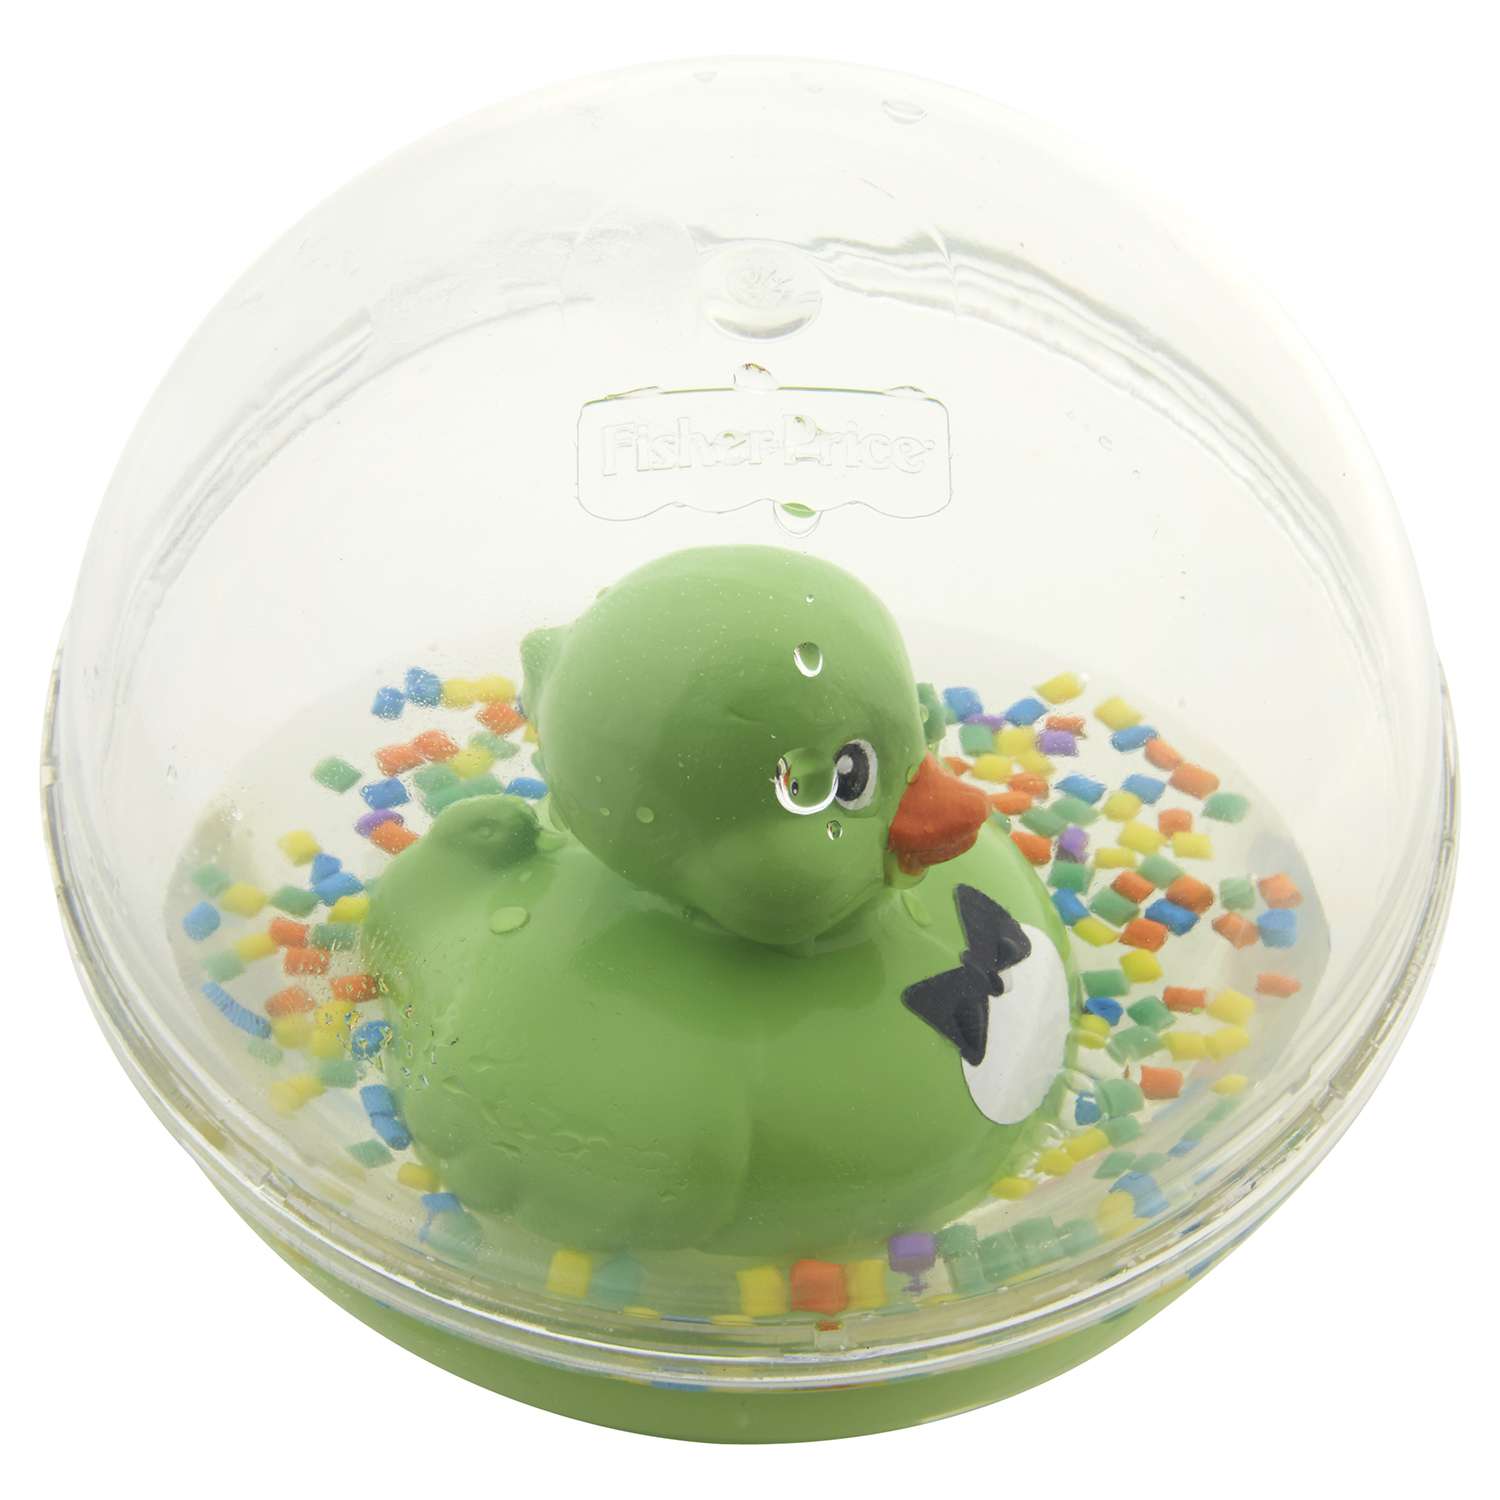 Шар Fisher Price с плавающей игрушкой Утка Зеленая DVH73 - фото 4